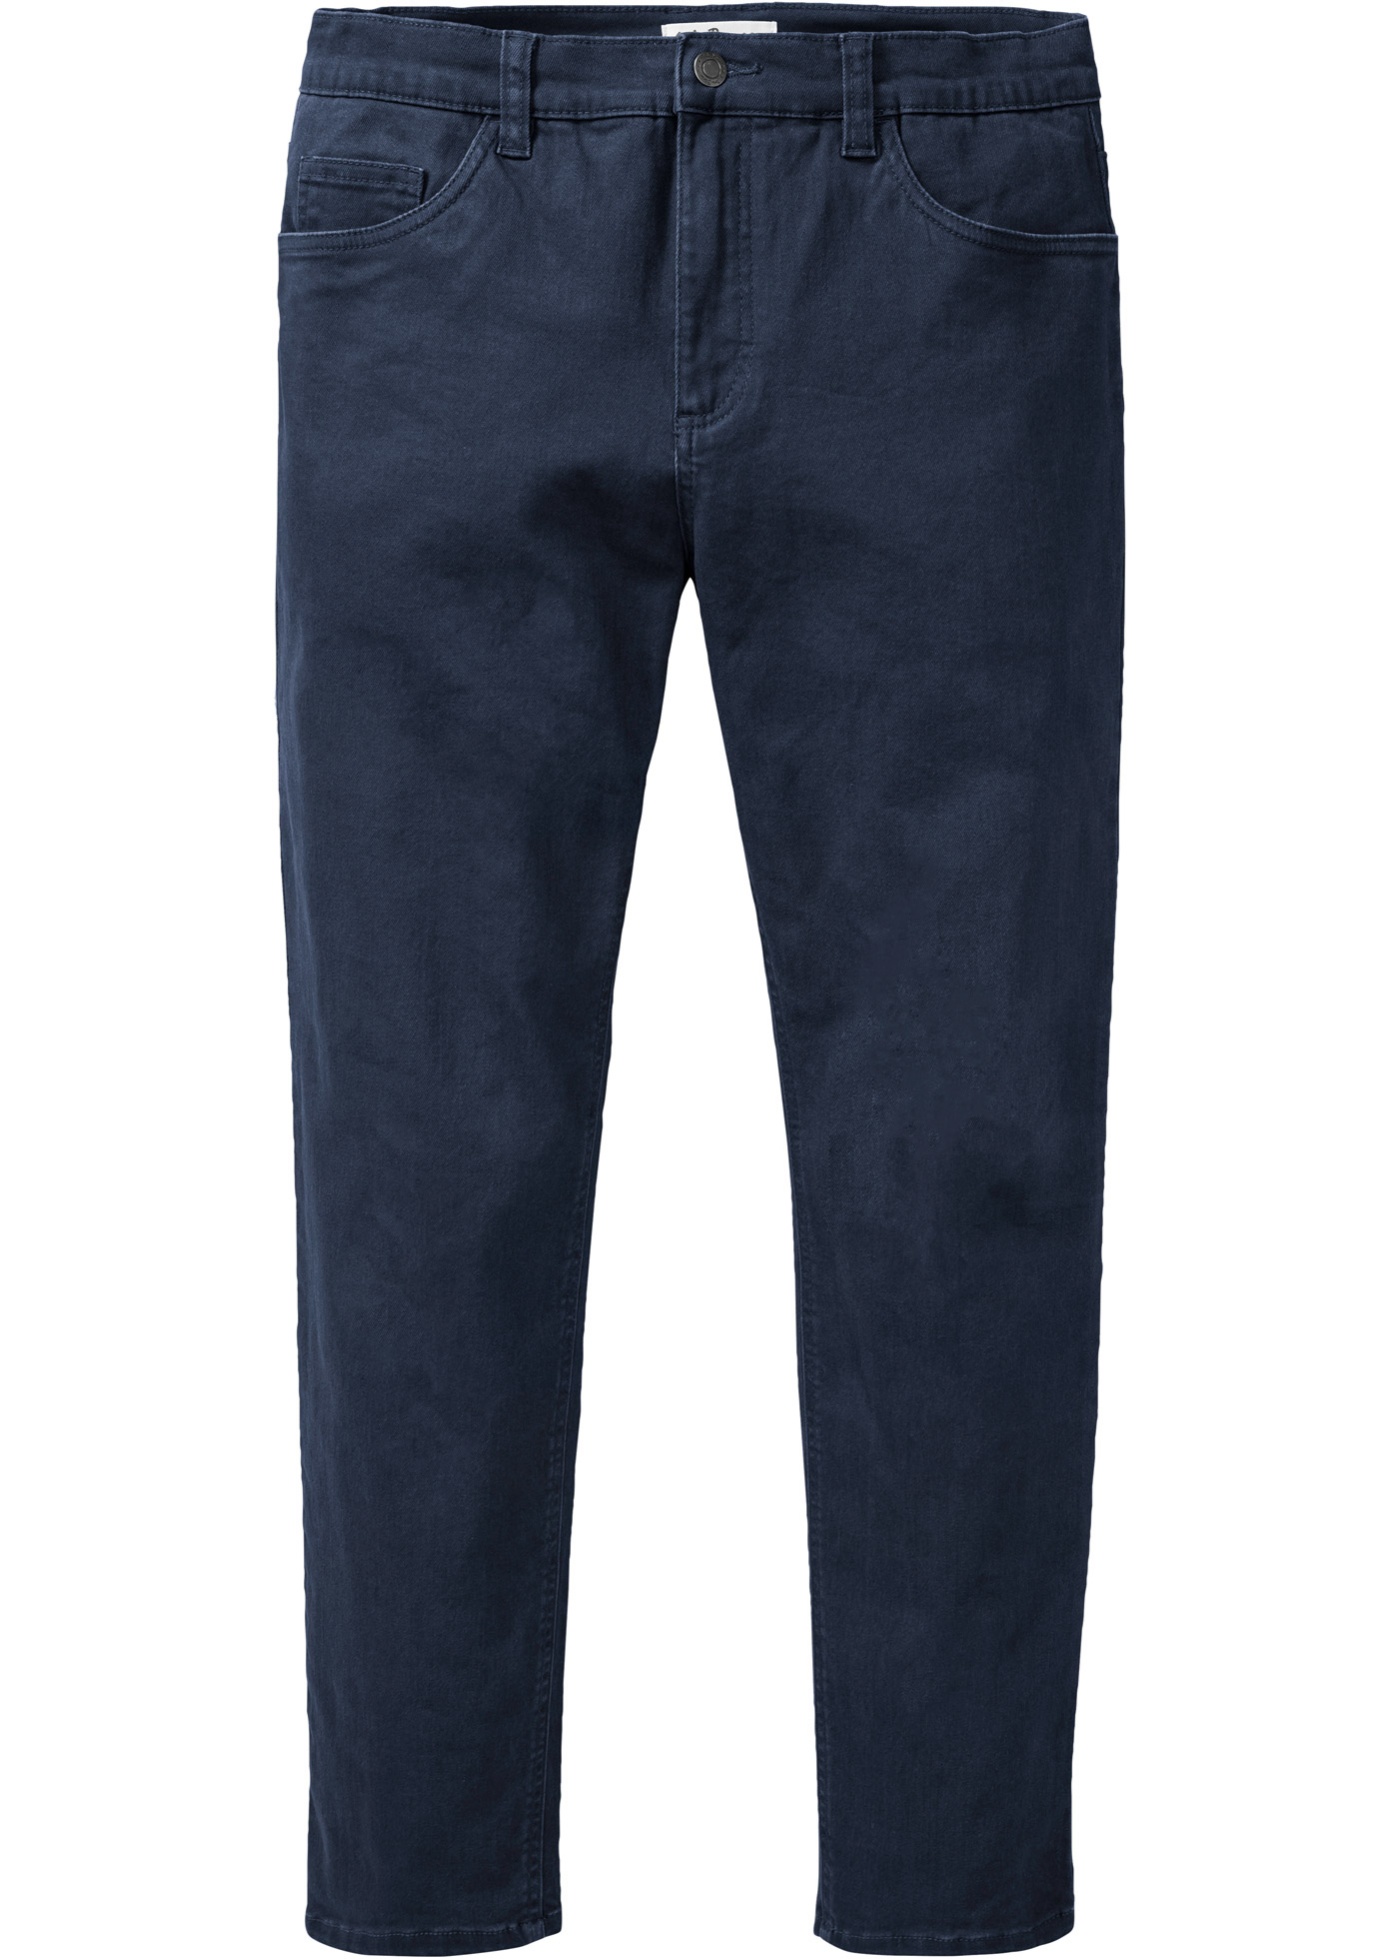 Jeans elasticizzati classic fit, tapered (Blu) - John Baner JEANSWEAR